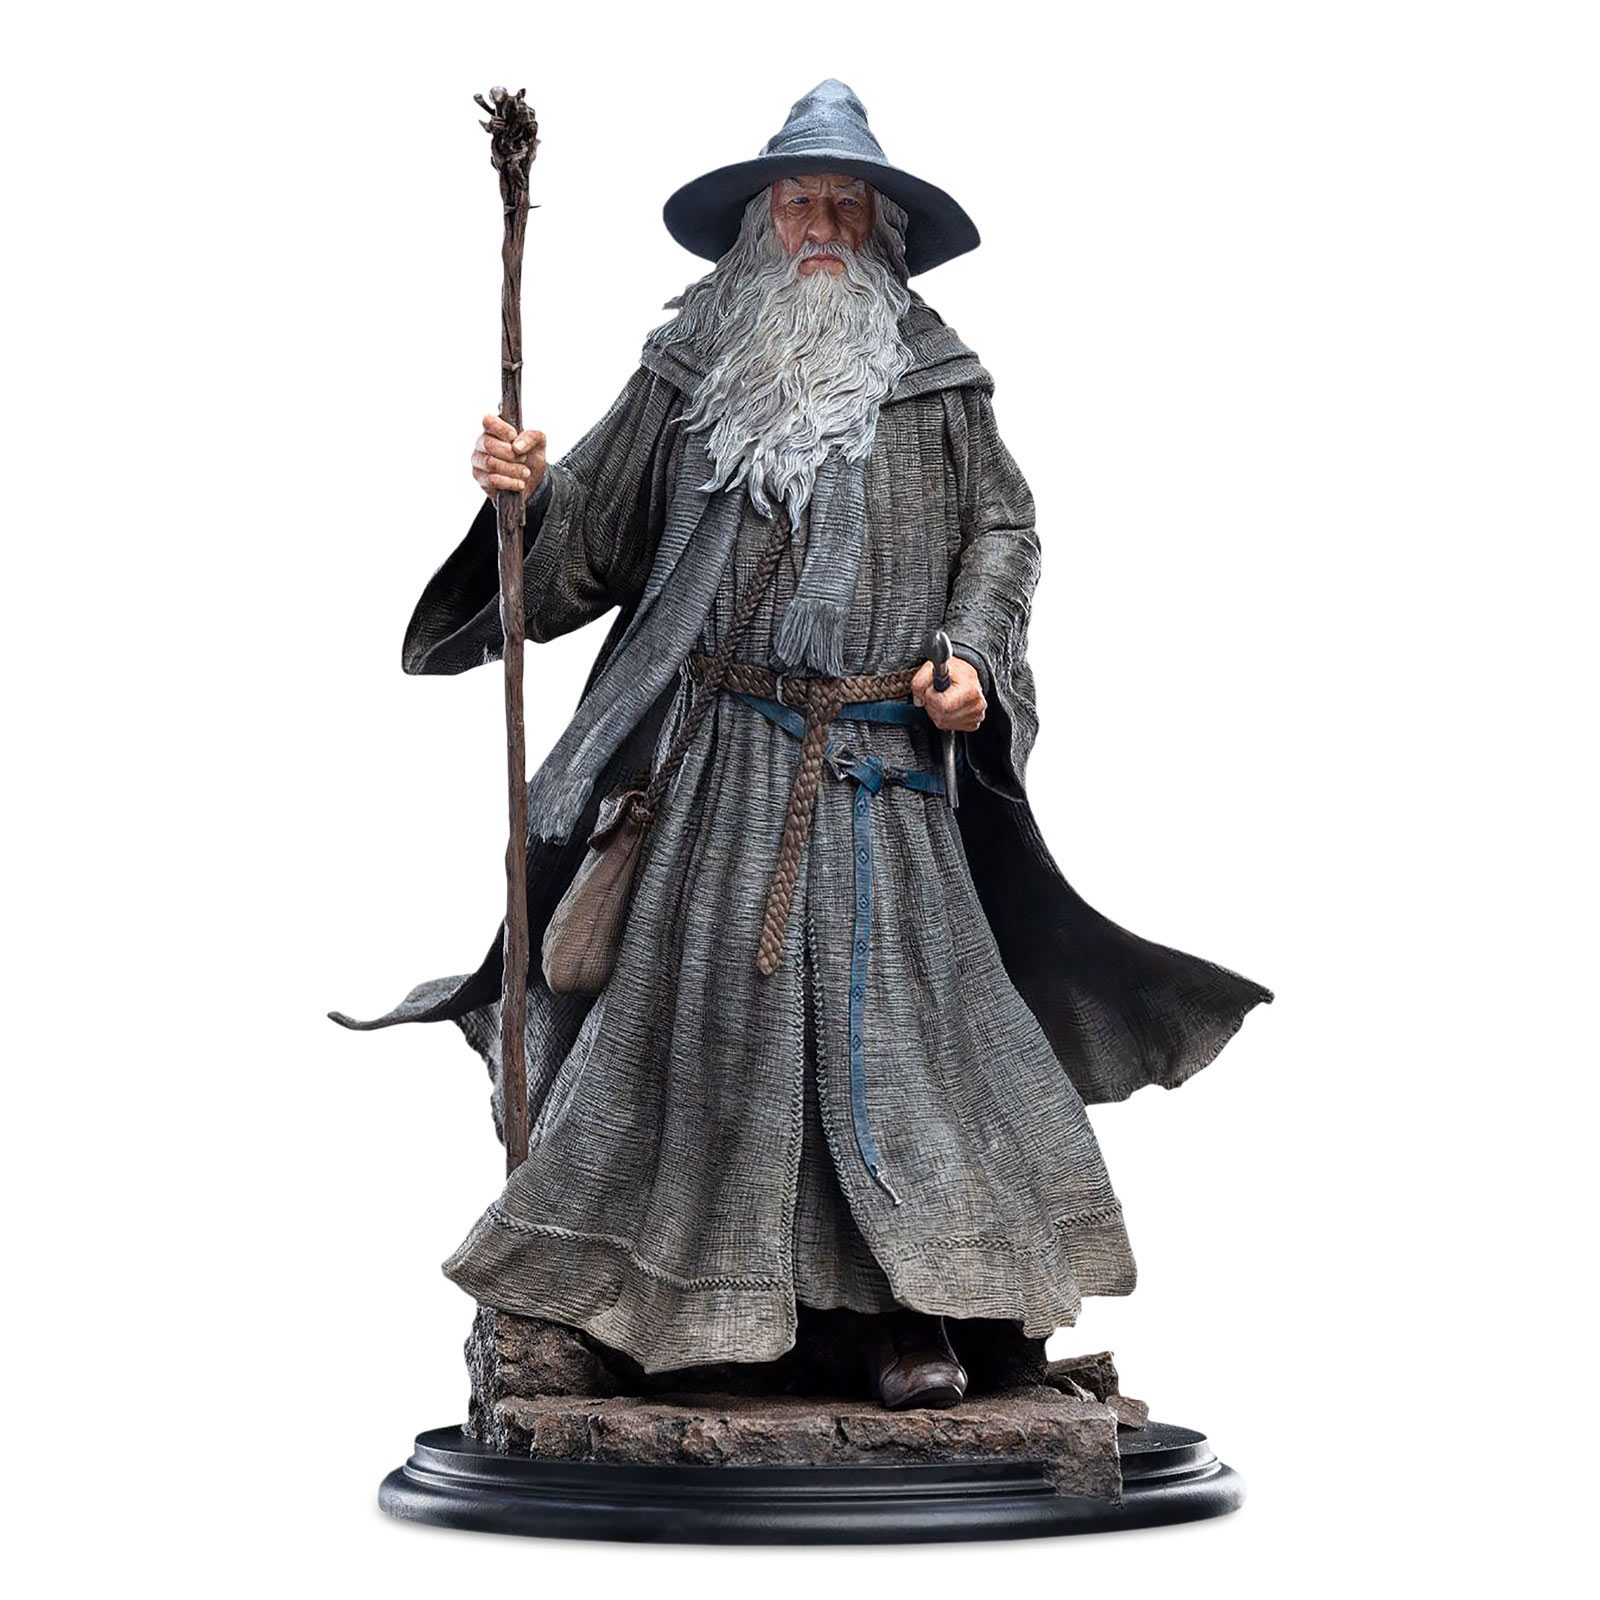 Herr Der Ringe Gandalf Der Graue Classic Series Deluxe Figur 35 Cm Elbenwald